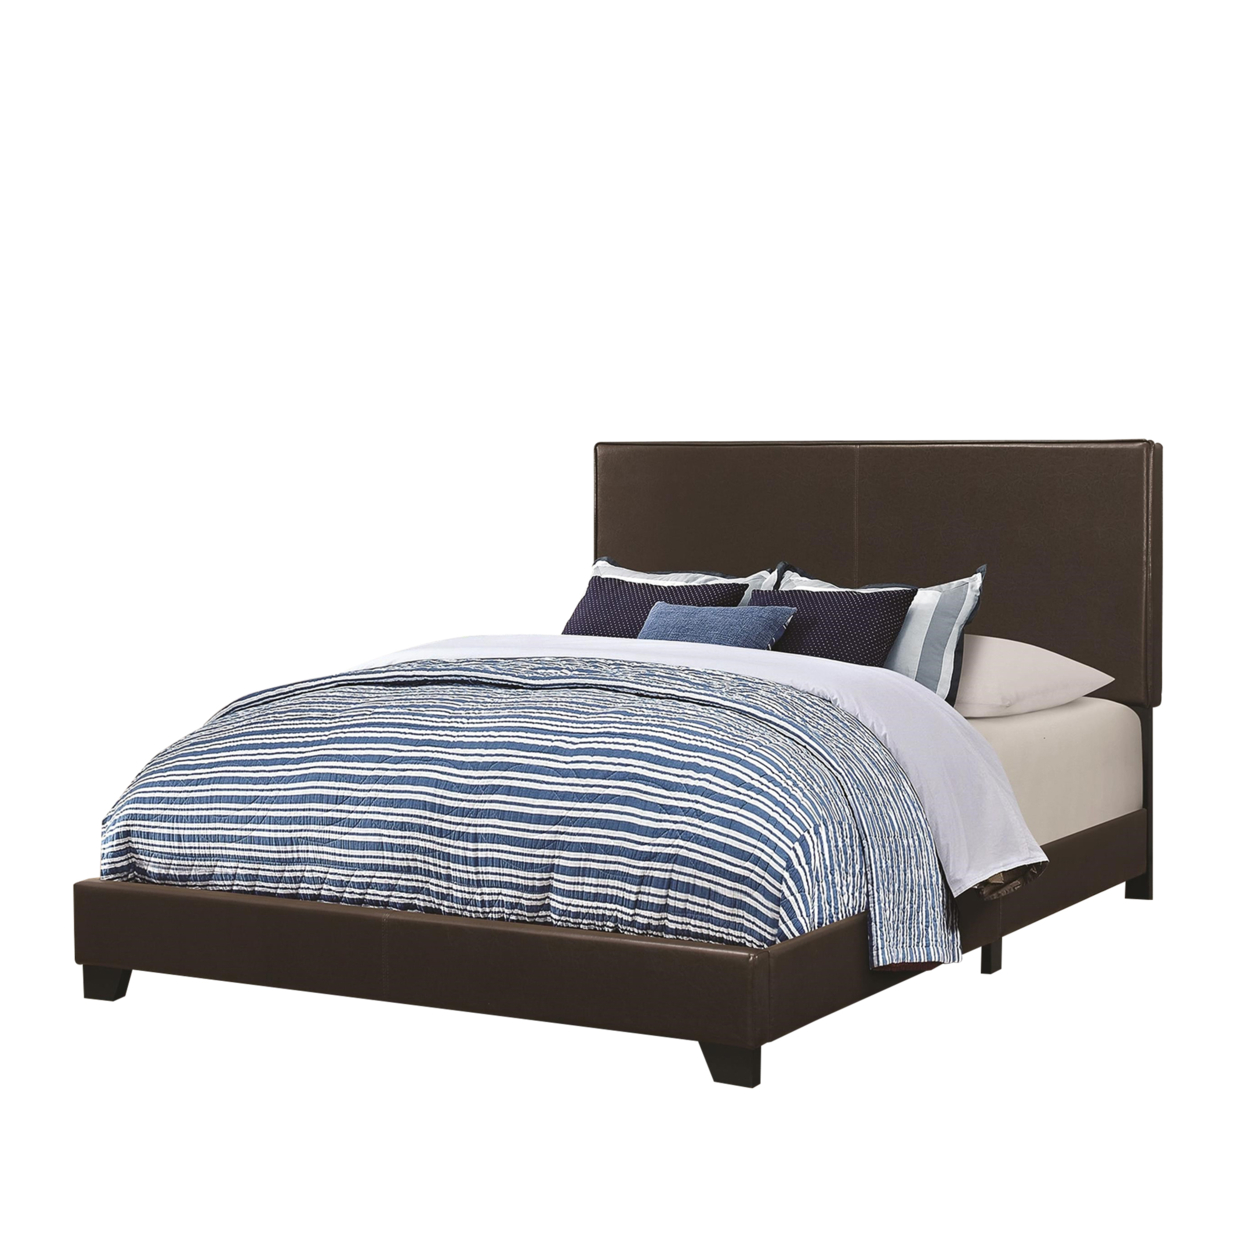 Leather Upholstered Twin Size Platform Bed, Brown- Saltoro Sherpi